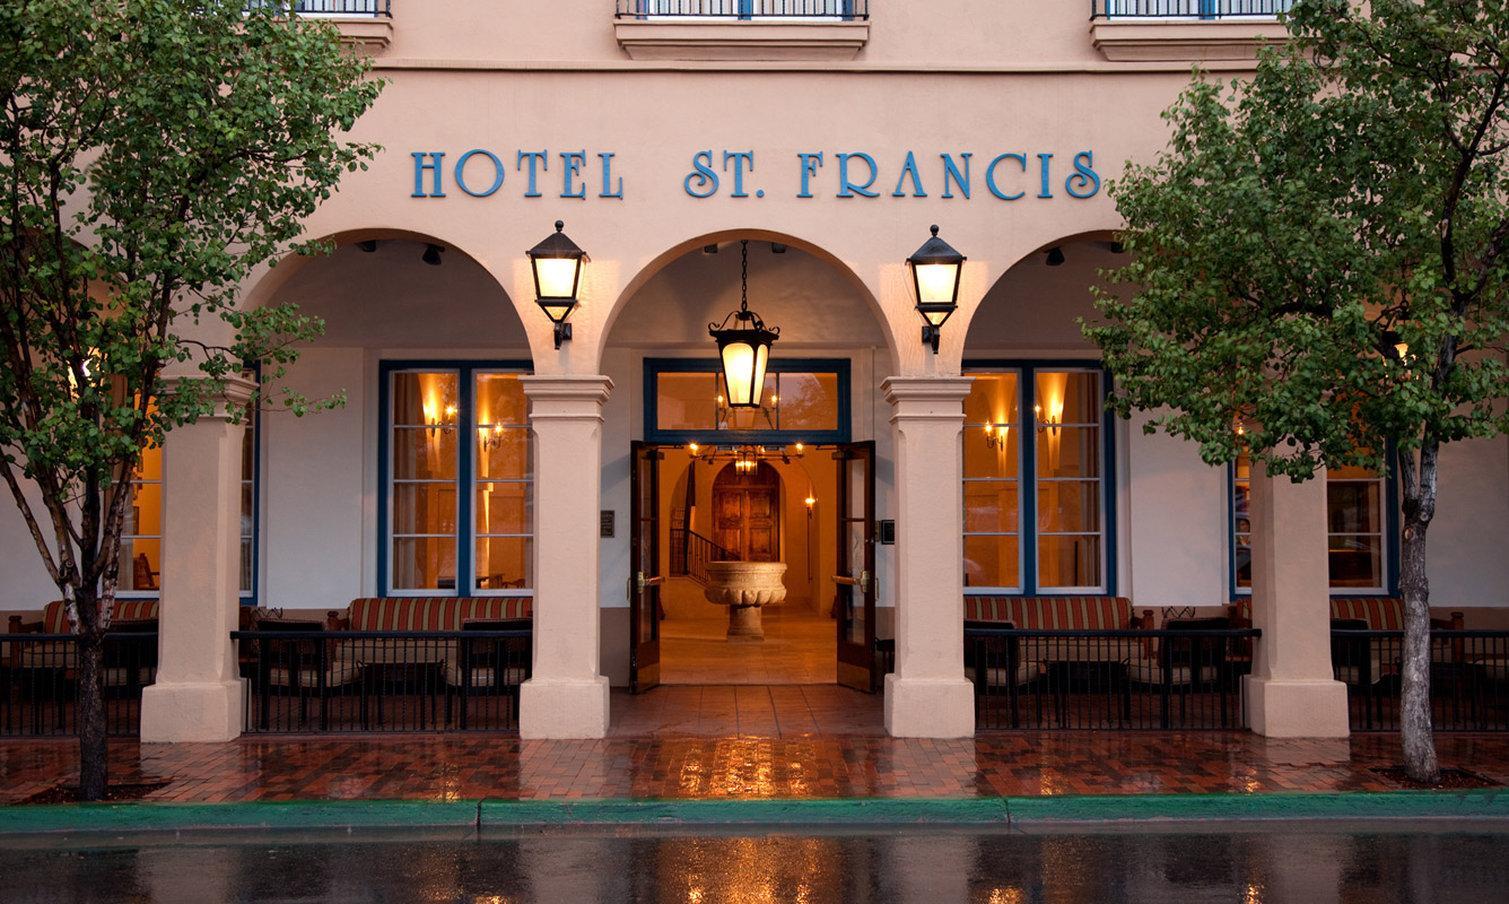 Hotel St. Francis image